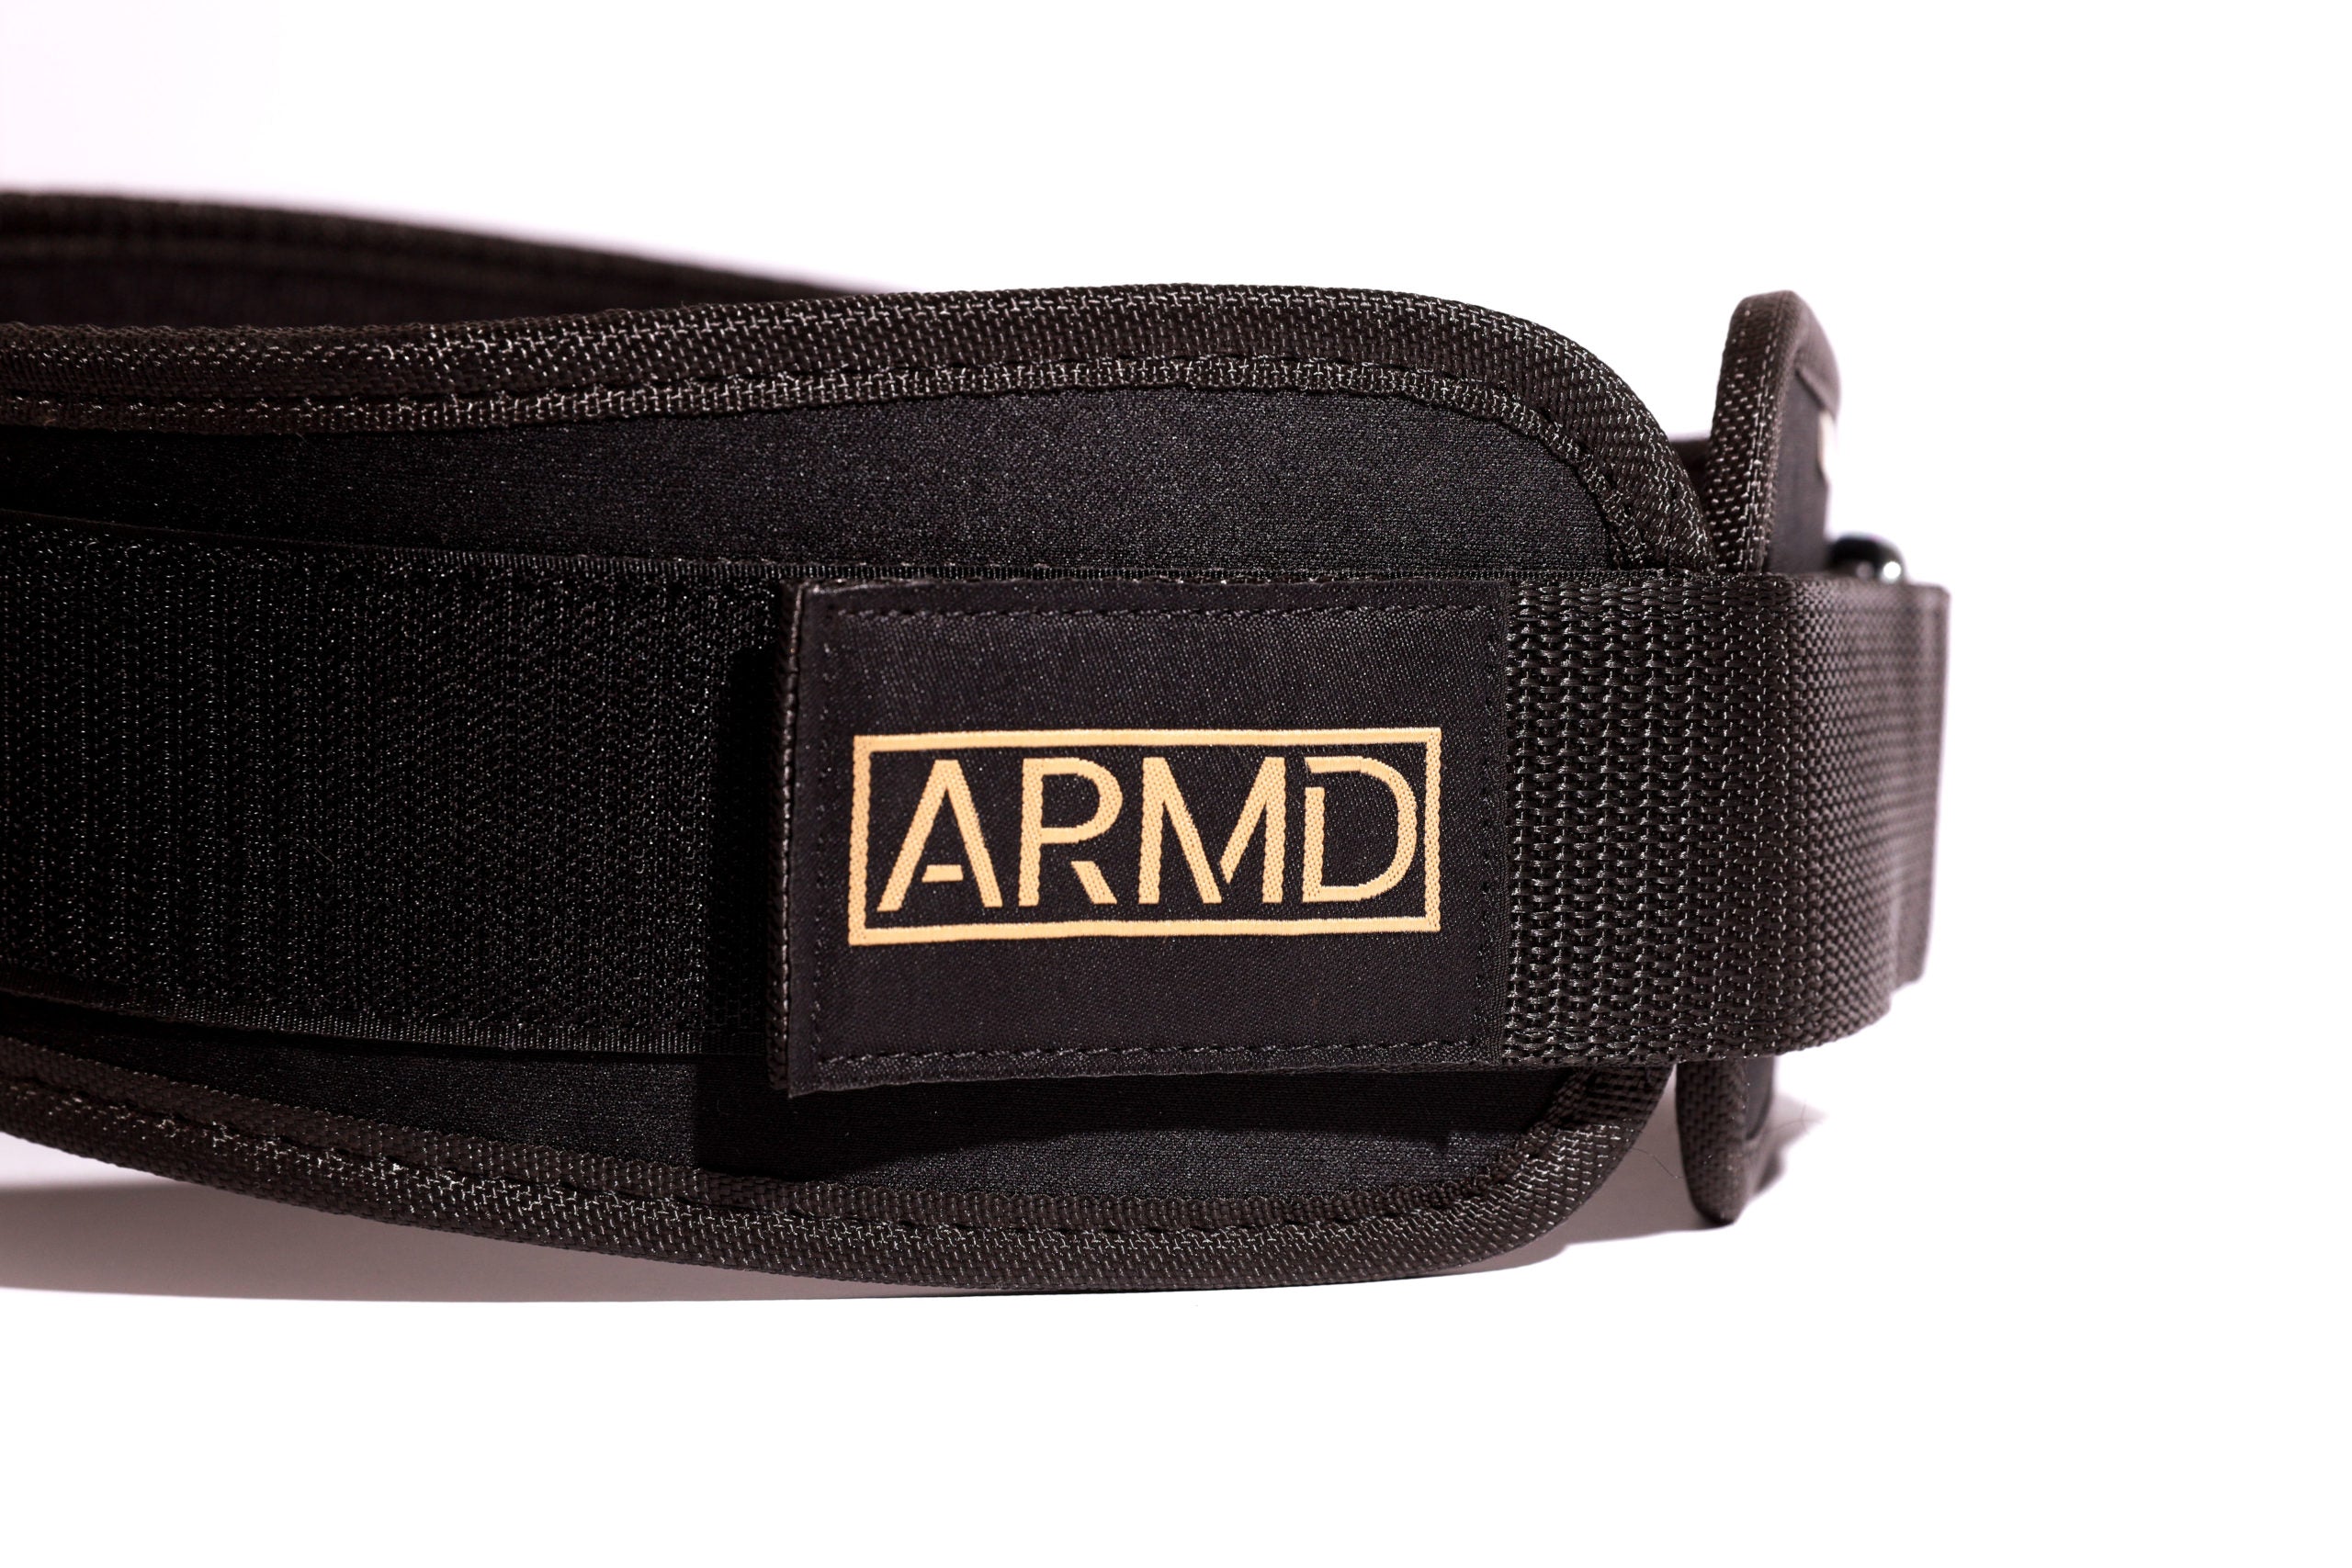 ARMD 5" Neoprene Weight Lifting Belt - ARMD HQ